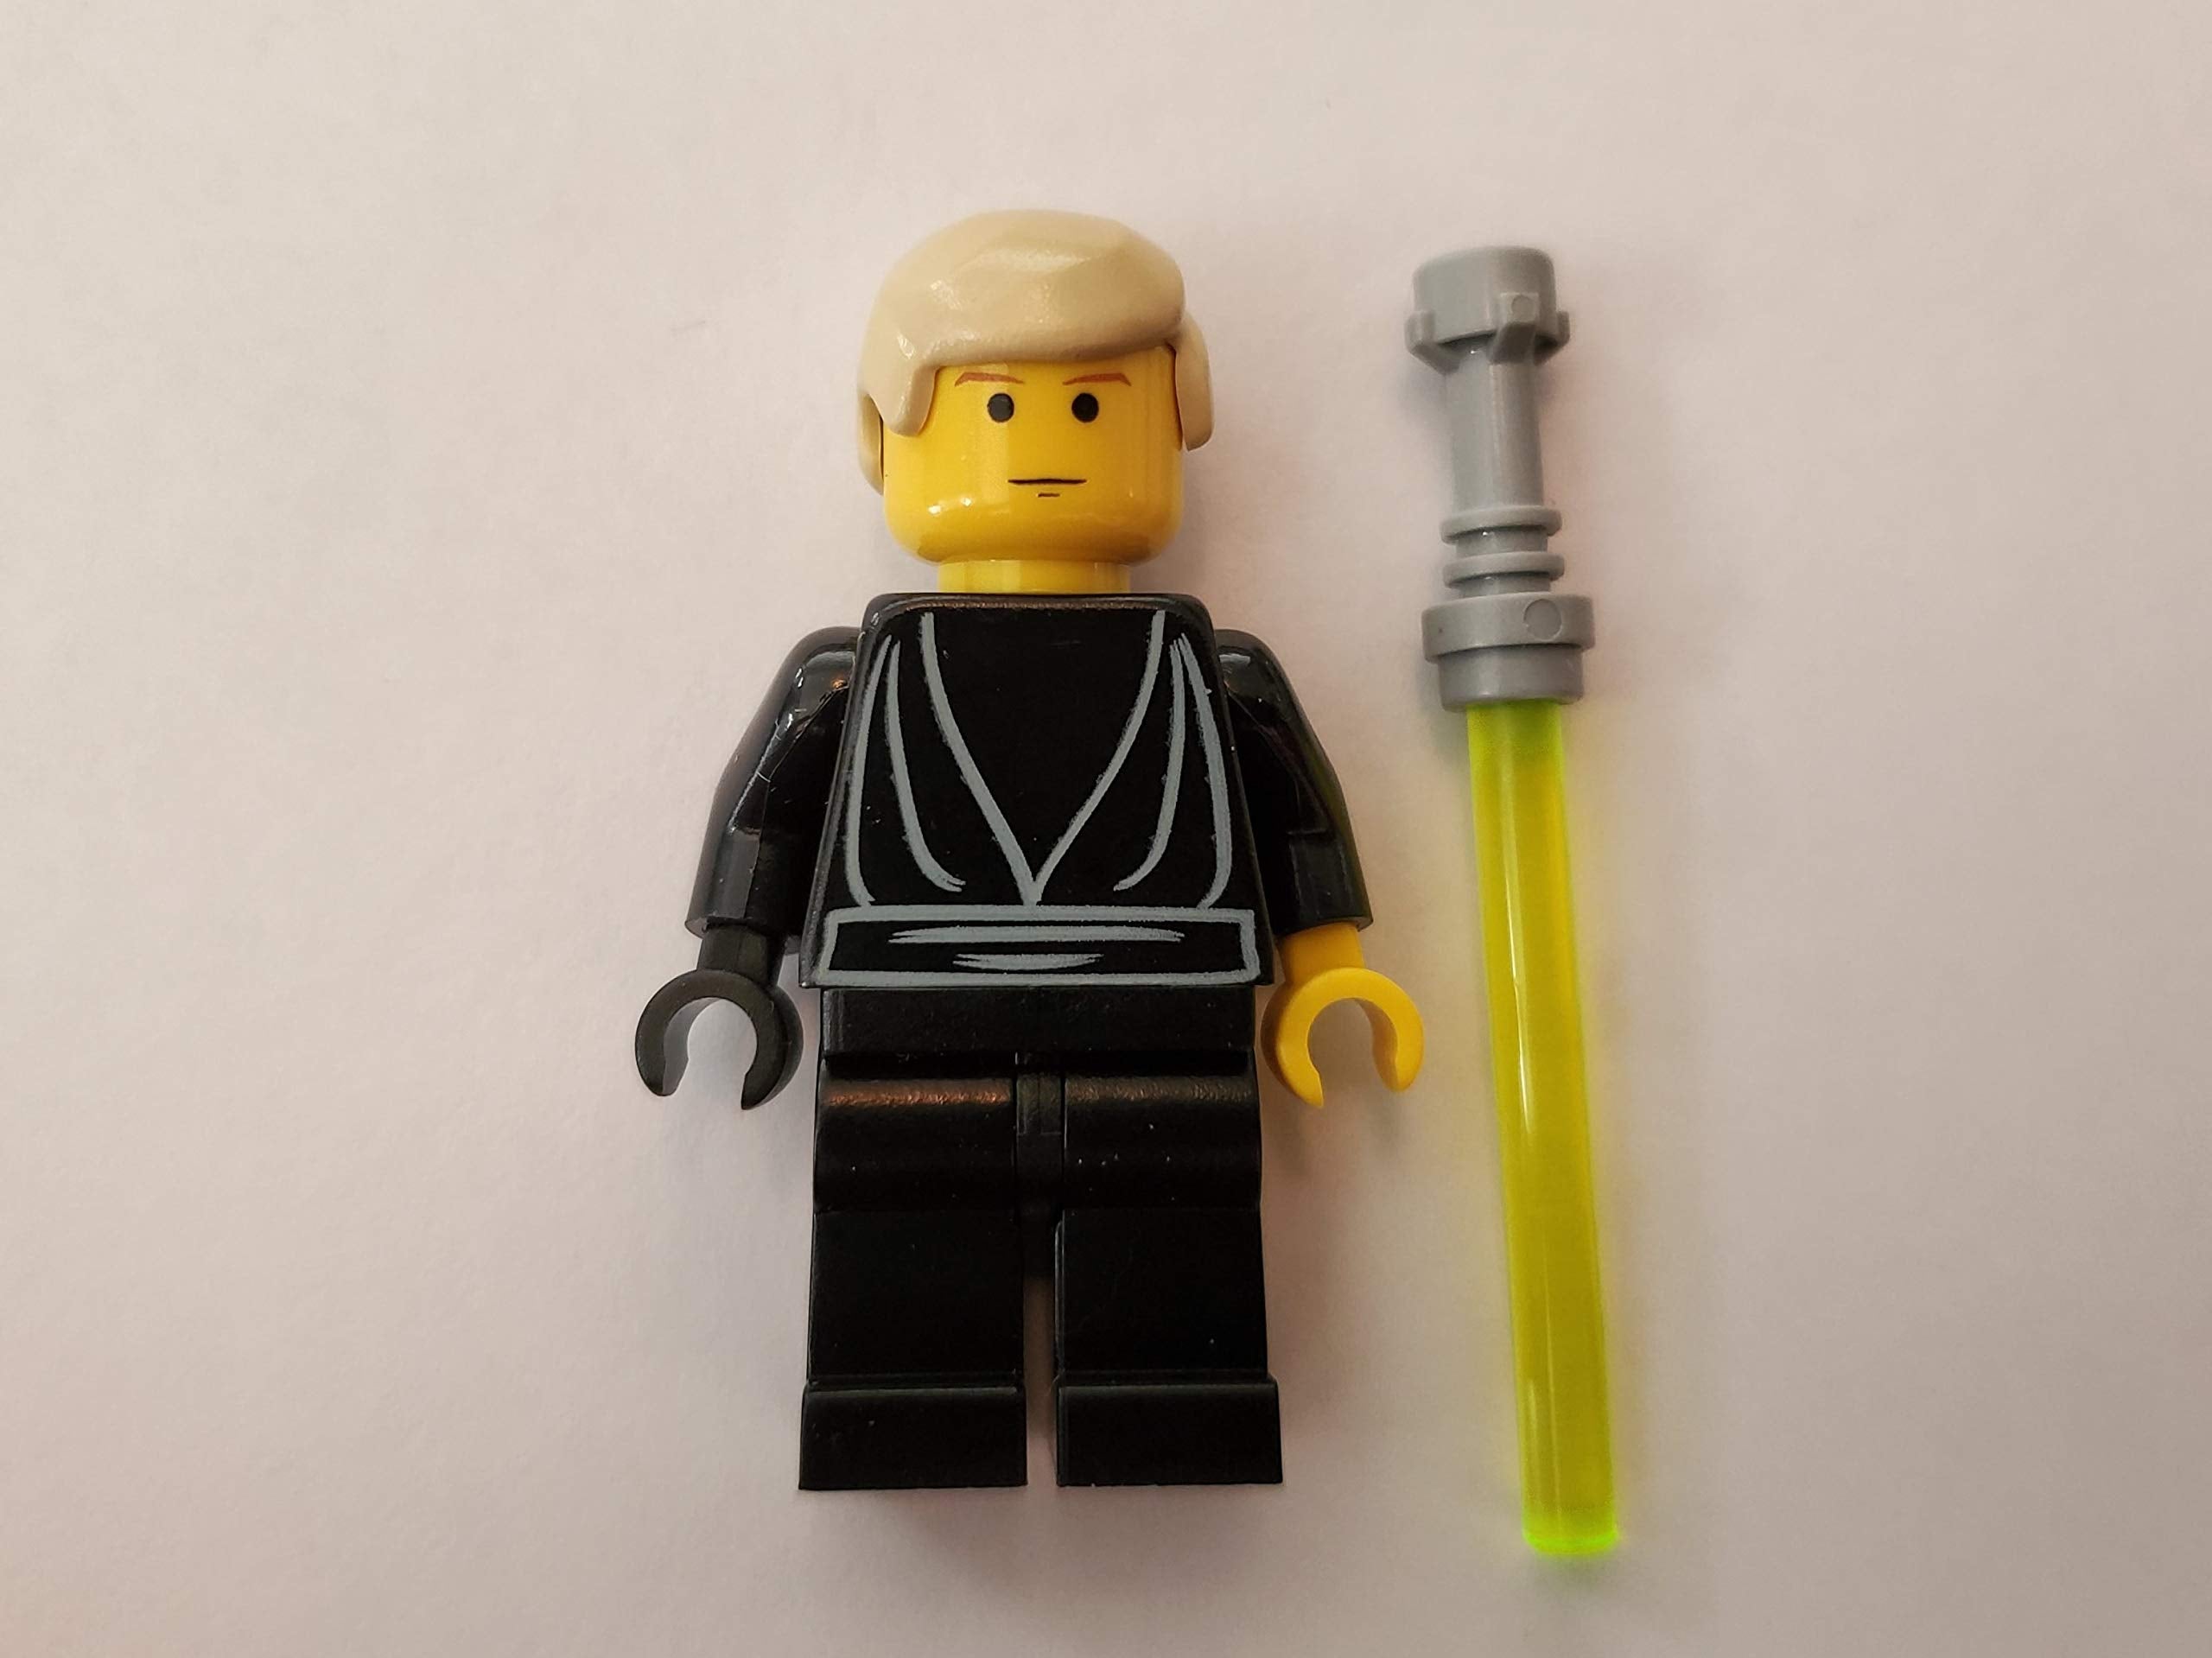 LEGO Star Wars Minifigure Luke Skywalker With Lightsaber From Set 7201 Final Duel II